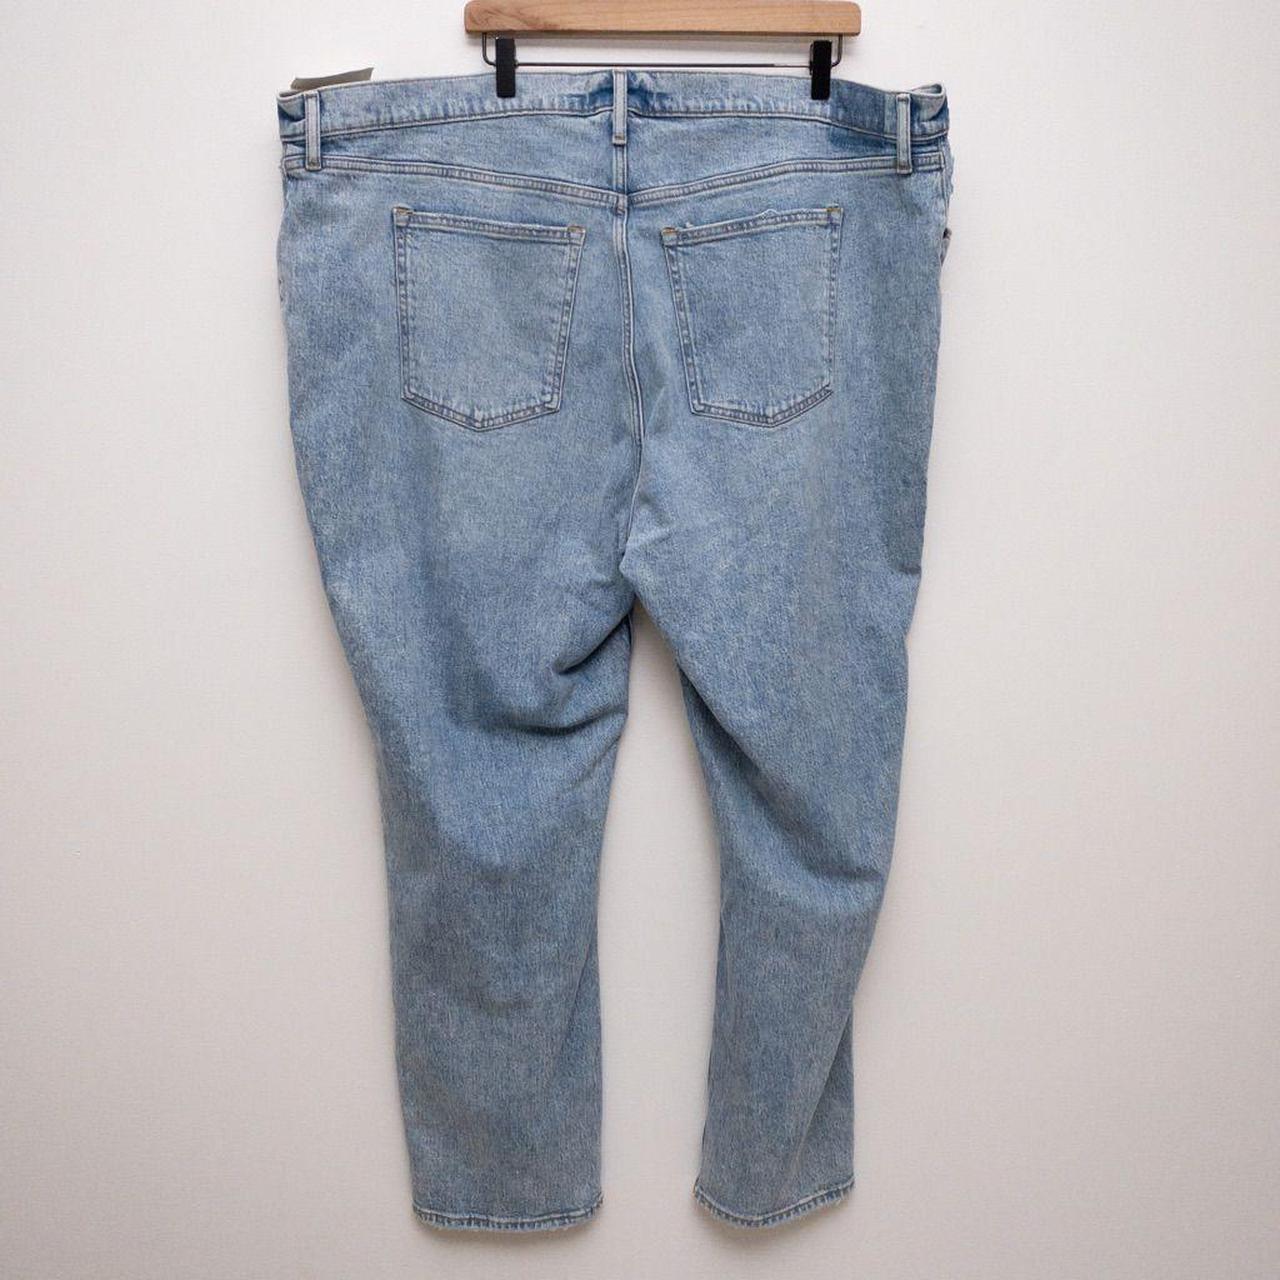 Abercrombie & Fitch Women's Blue Jeans (3)